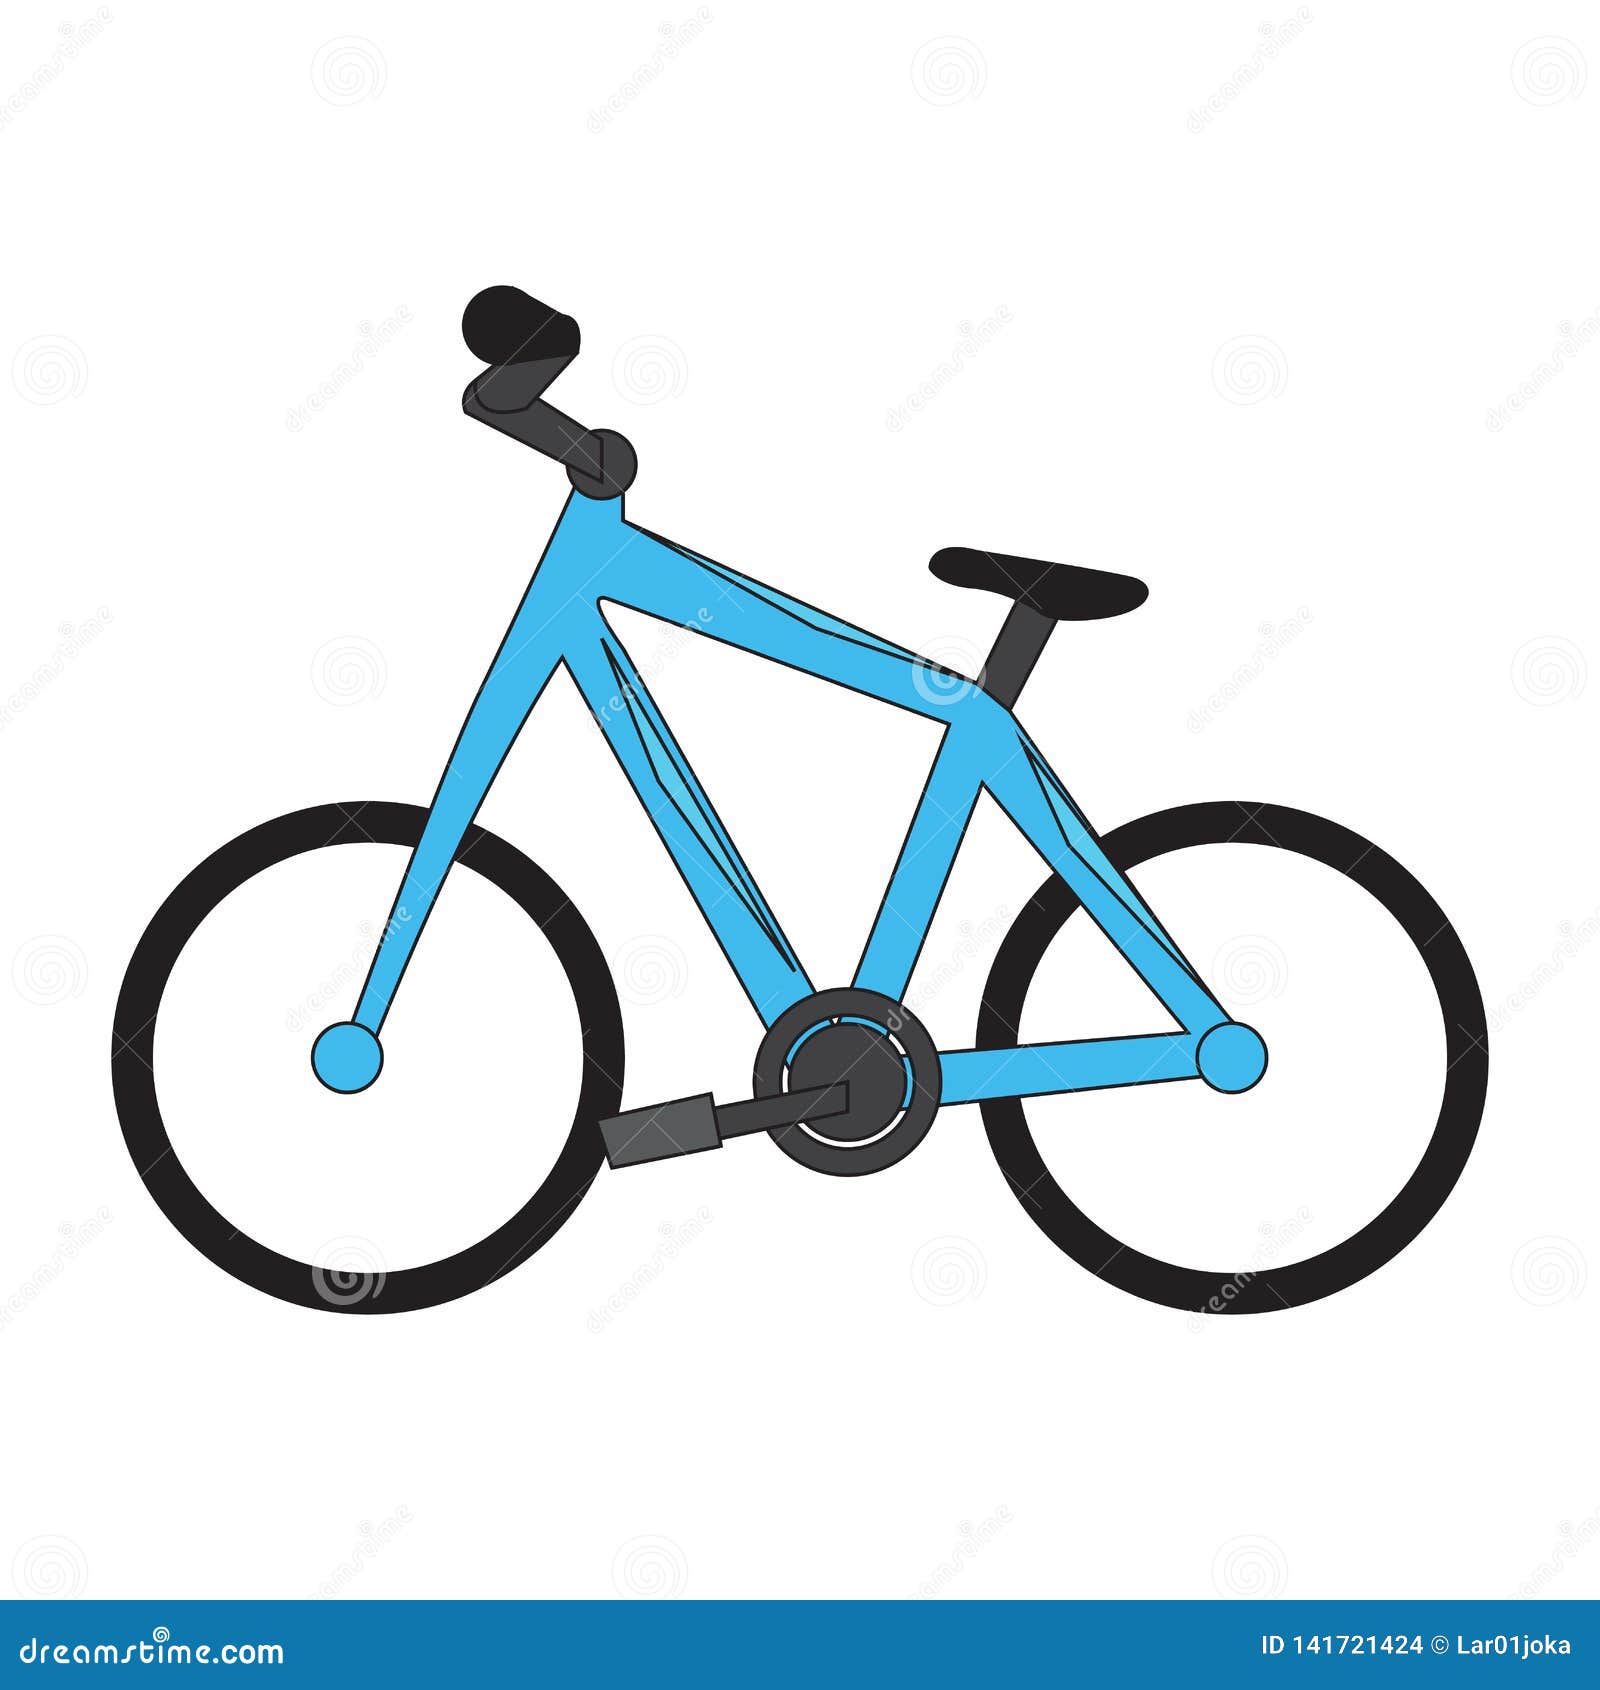 Isolated bike cartoon stock vector. Illustration of white - 141721424